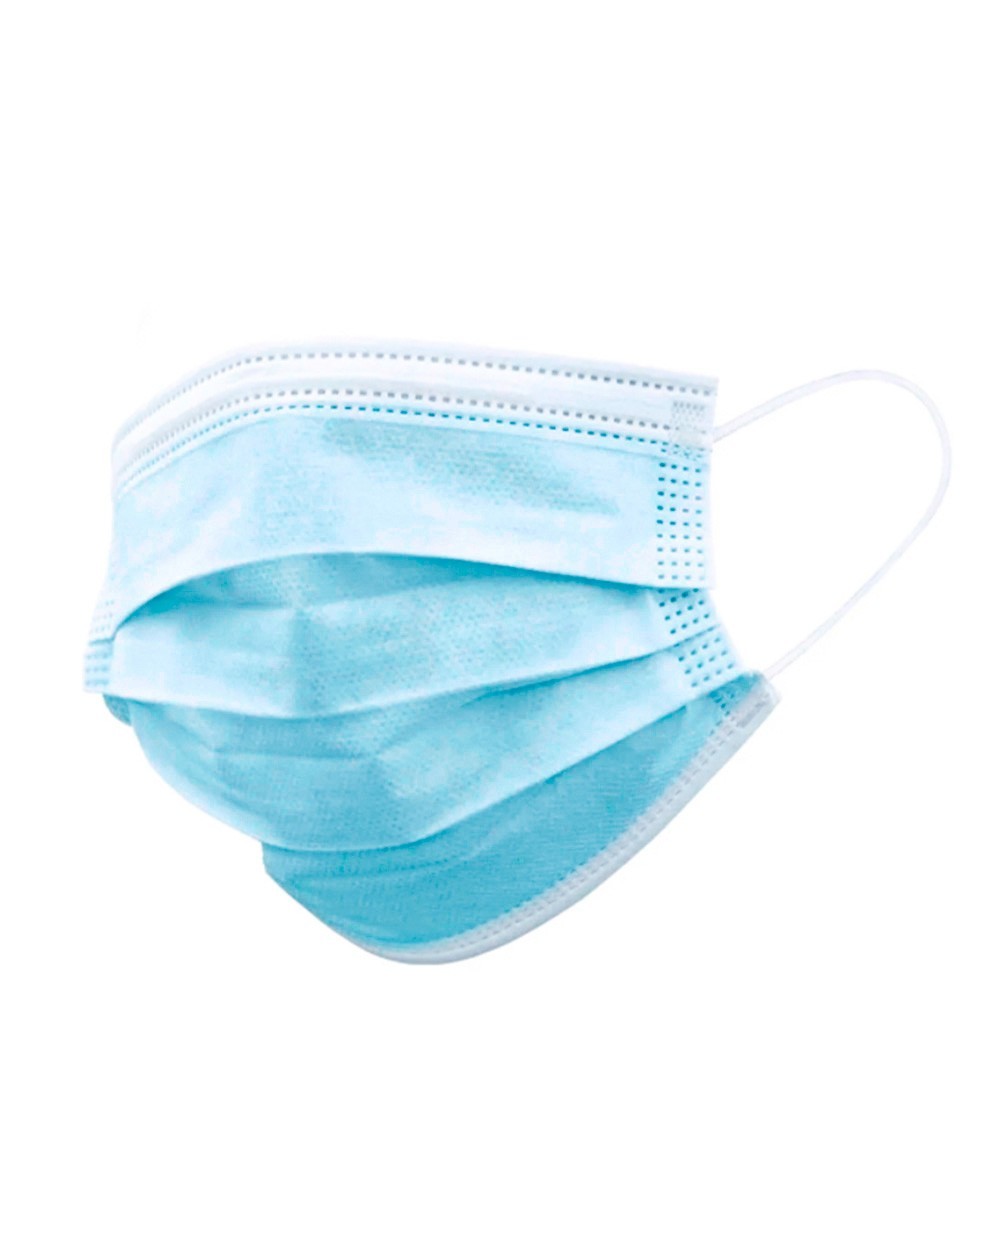 Mascarilla facial proteccion higienica desechable 3 capas filtracion color azul